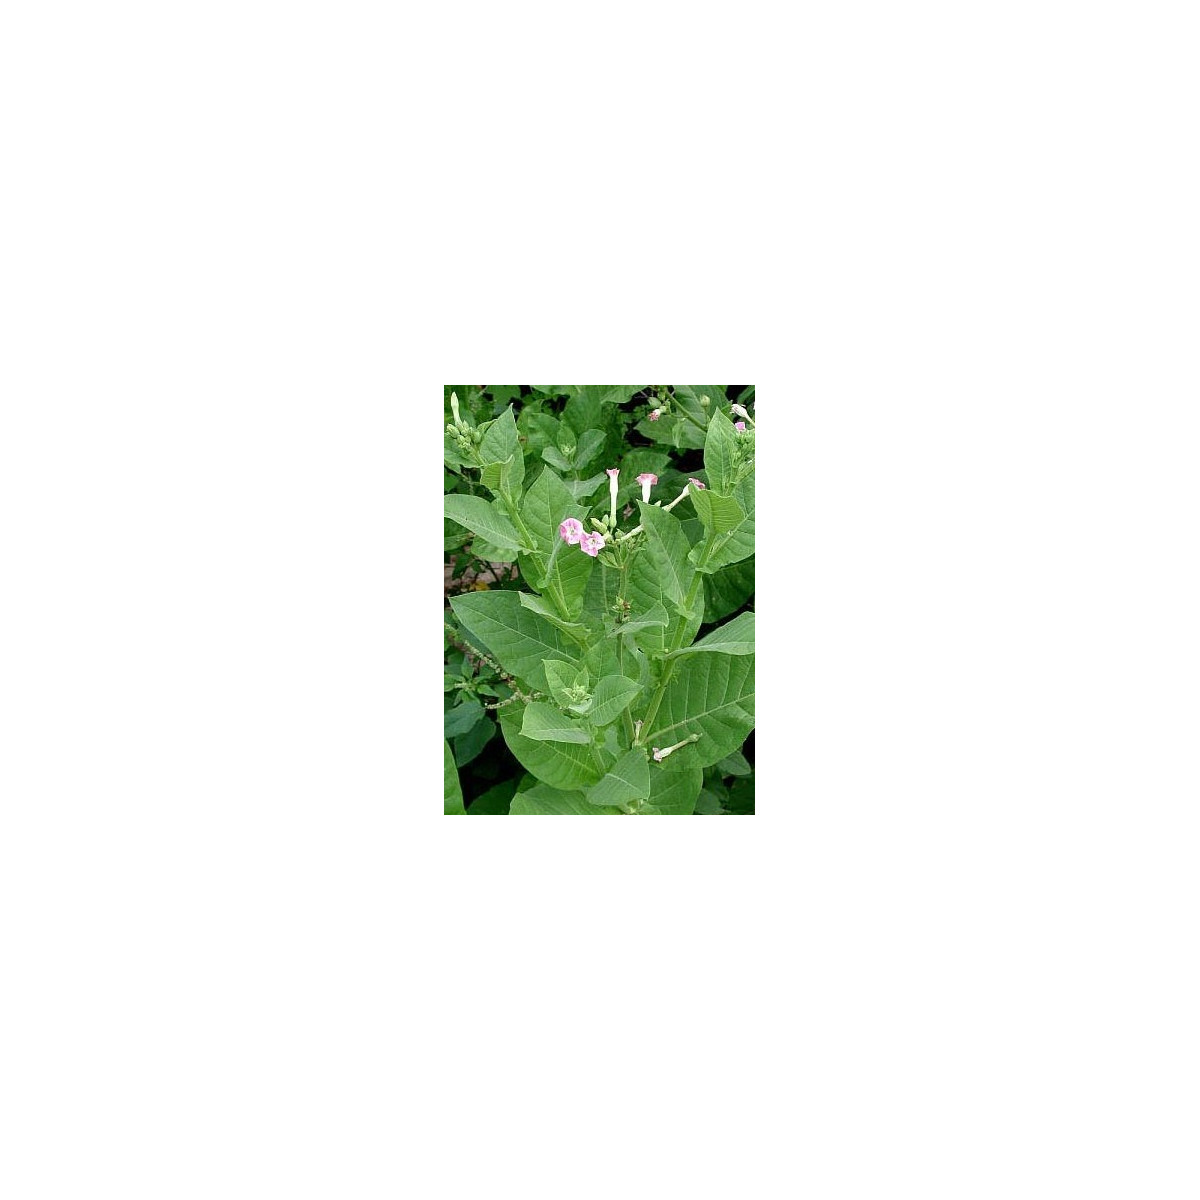 Tabák Green wood - Nicotiana tabacum - semena tabáku - 25 ks